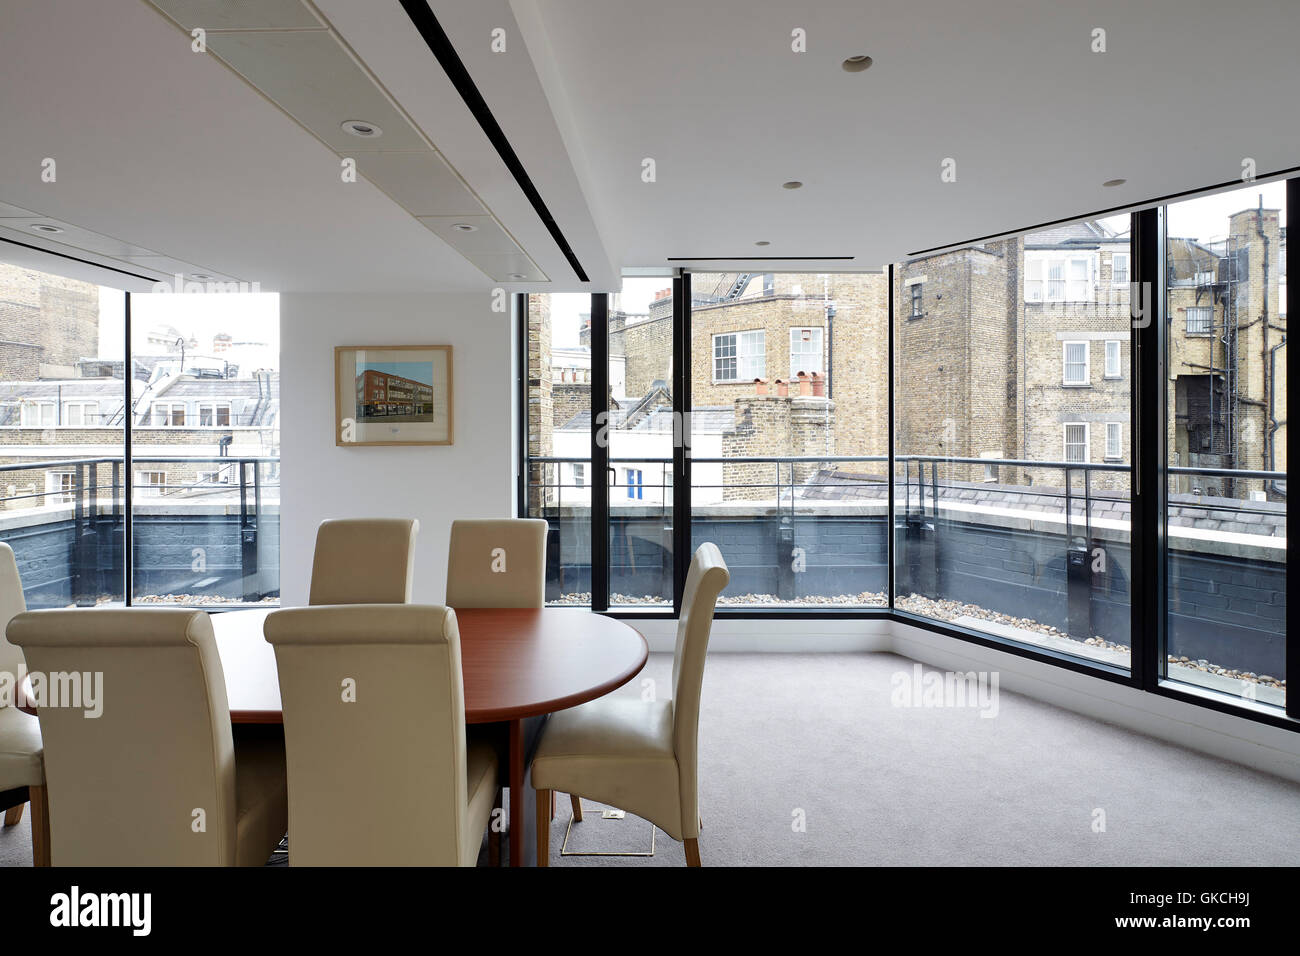 Board room, meeting room top floor. 54 Brooks Mews, London, United Kingdom. Architect: Stiff + Trevillion Architects, 2016. Stock Photo